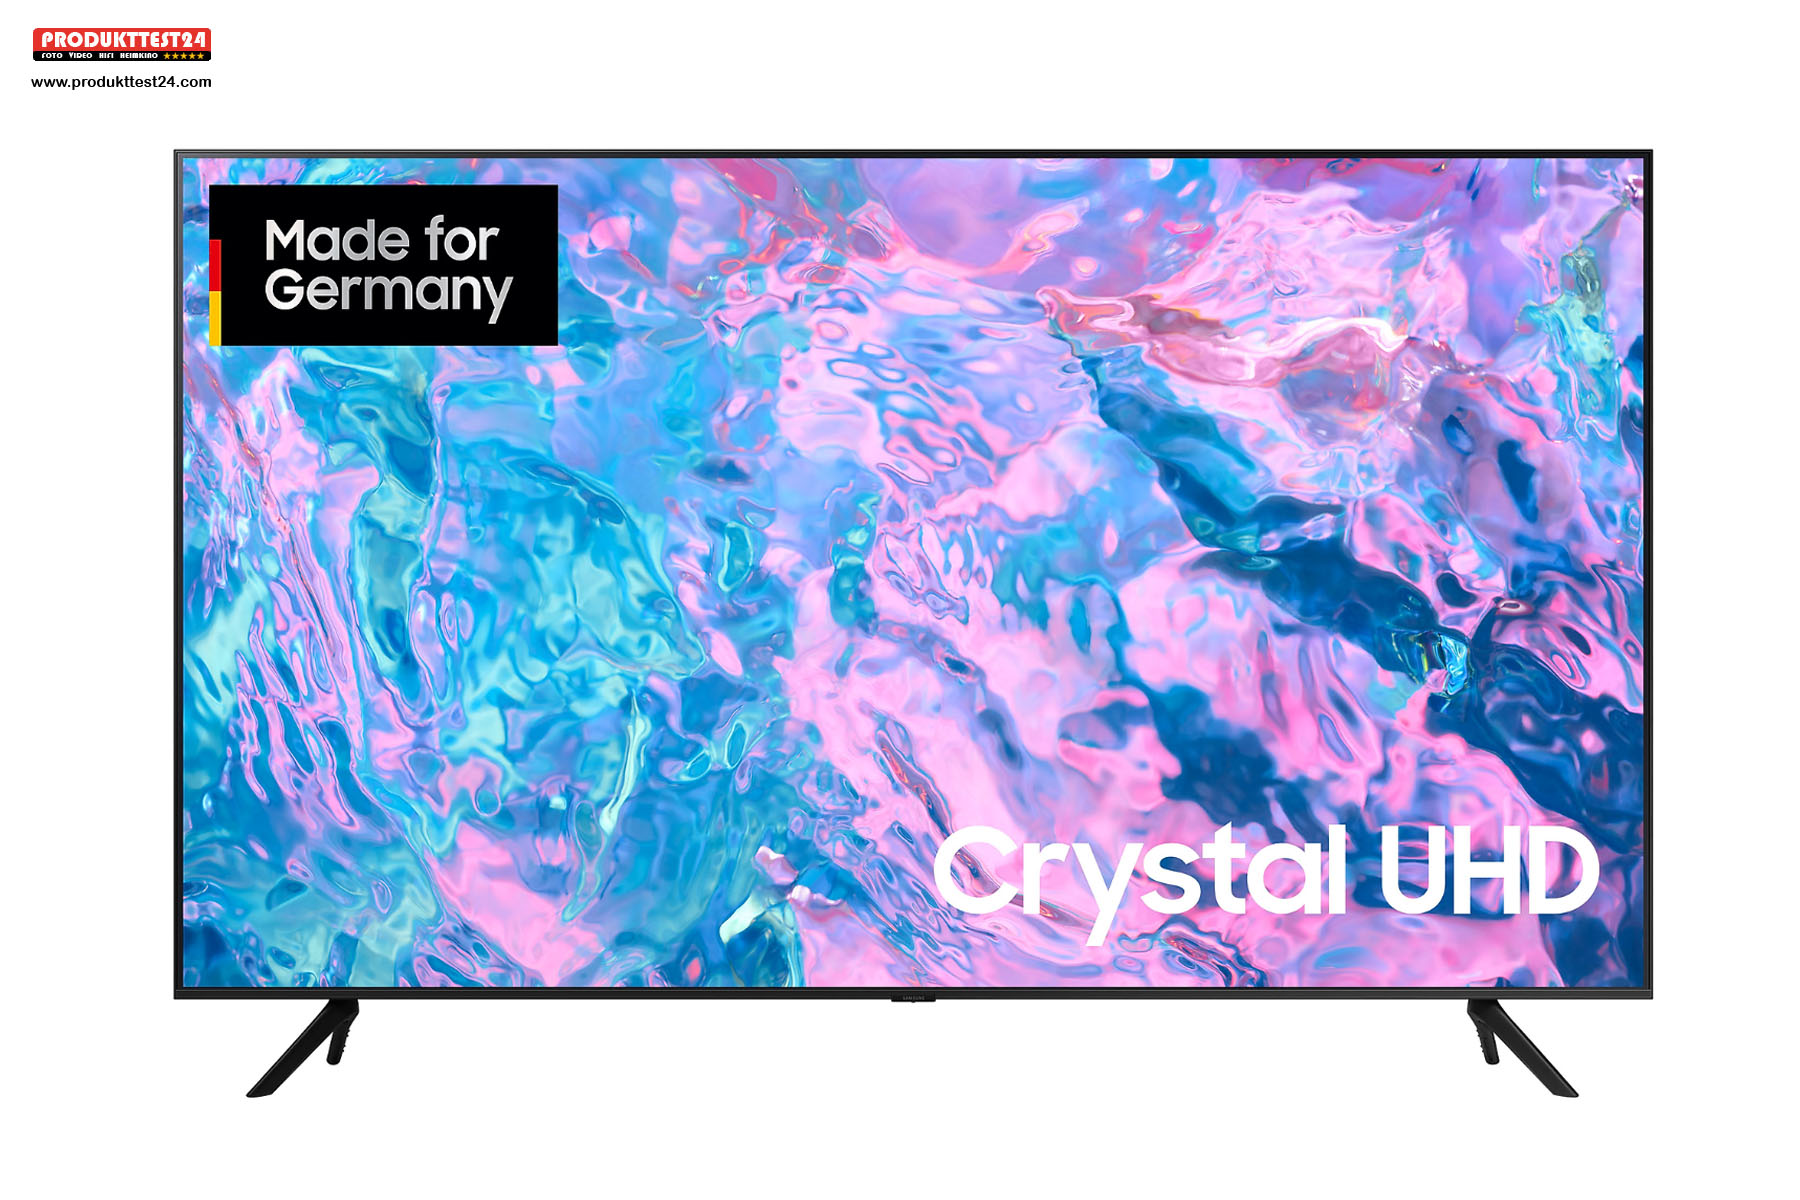 Der Samsung GU43CU7179 Crystal UHD 4K-Fernseher mit 43 Zoll Bilddiagonale